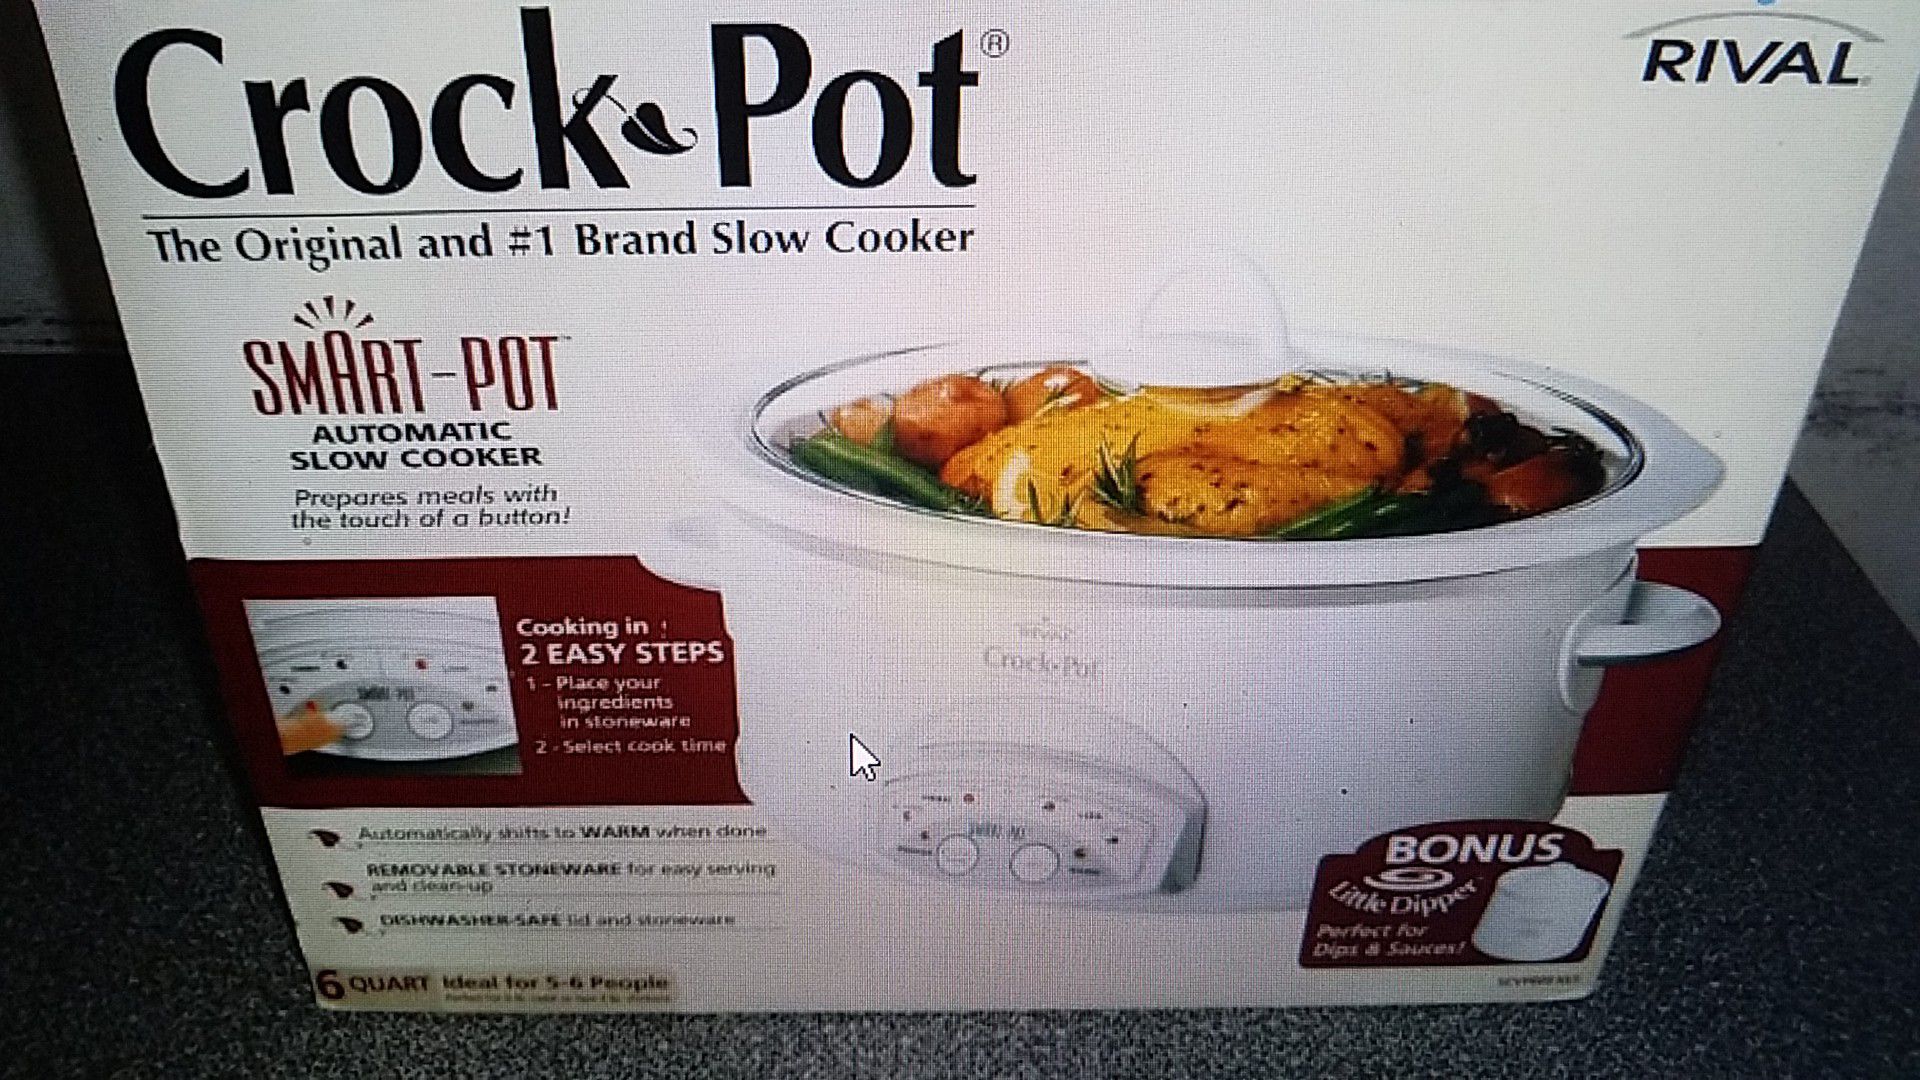 New rival Crock-Pot smart pot 6 quart slow cooker Little Dipper